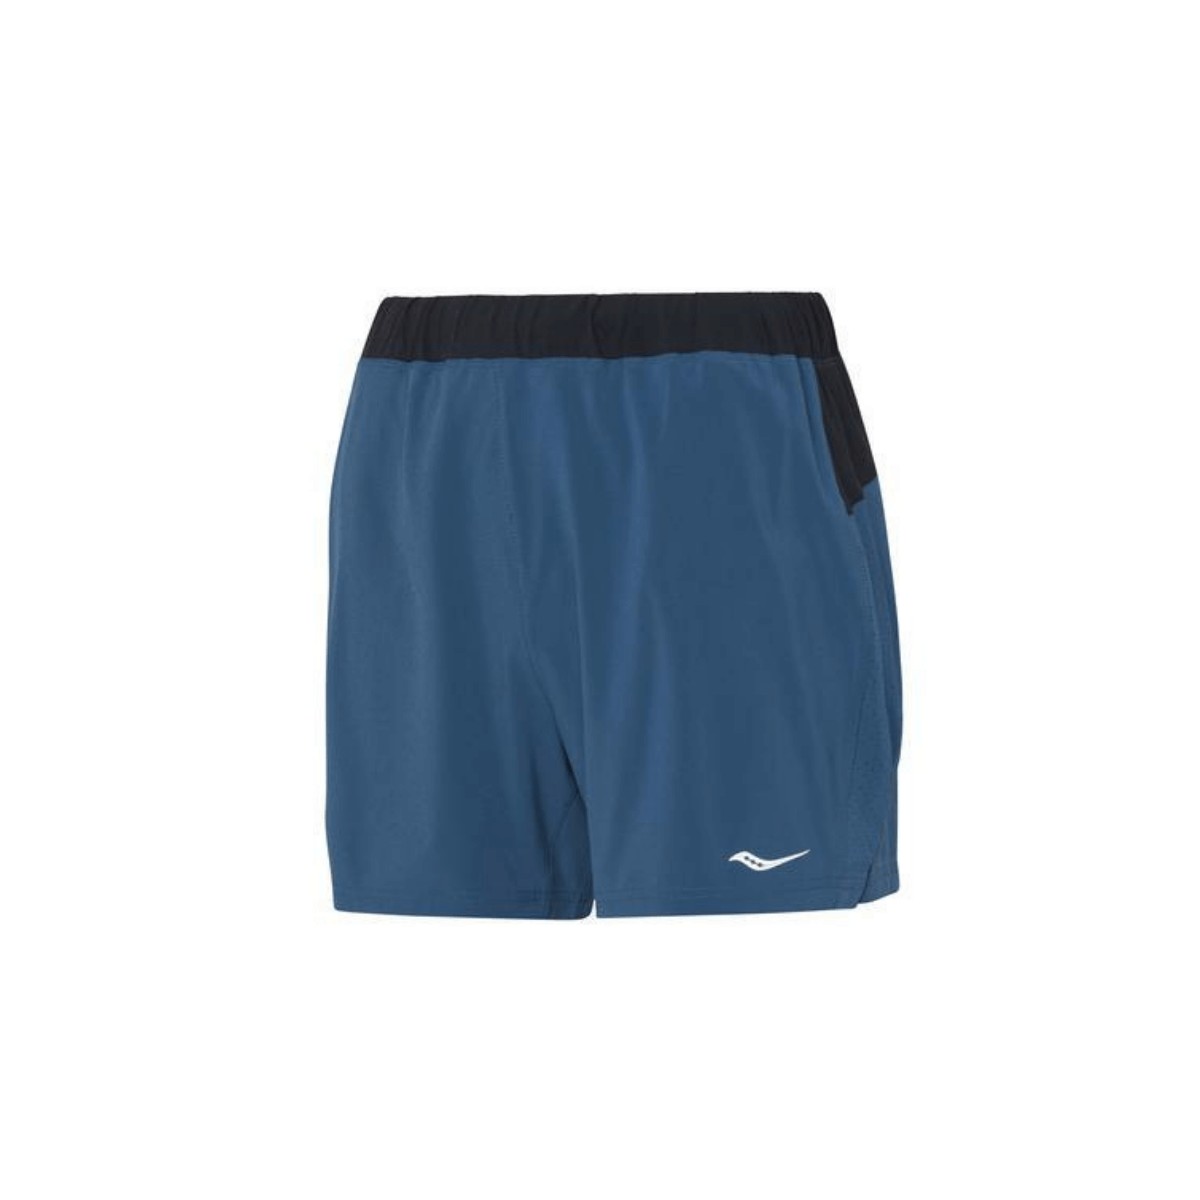 Saucony Outpace 5 Shorts Blue, Size S